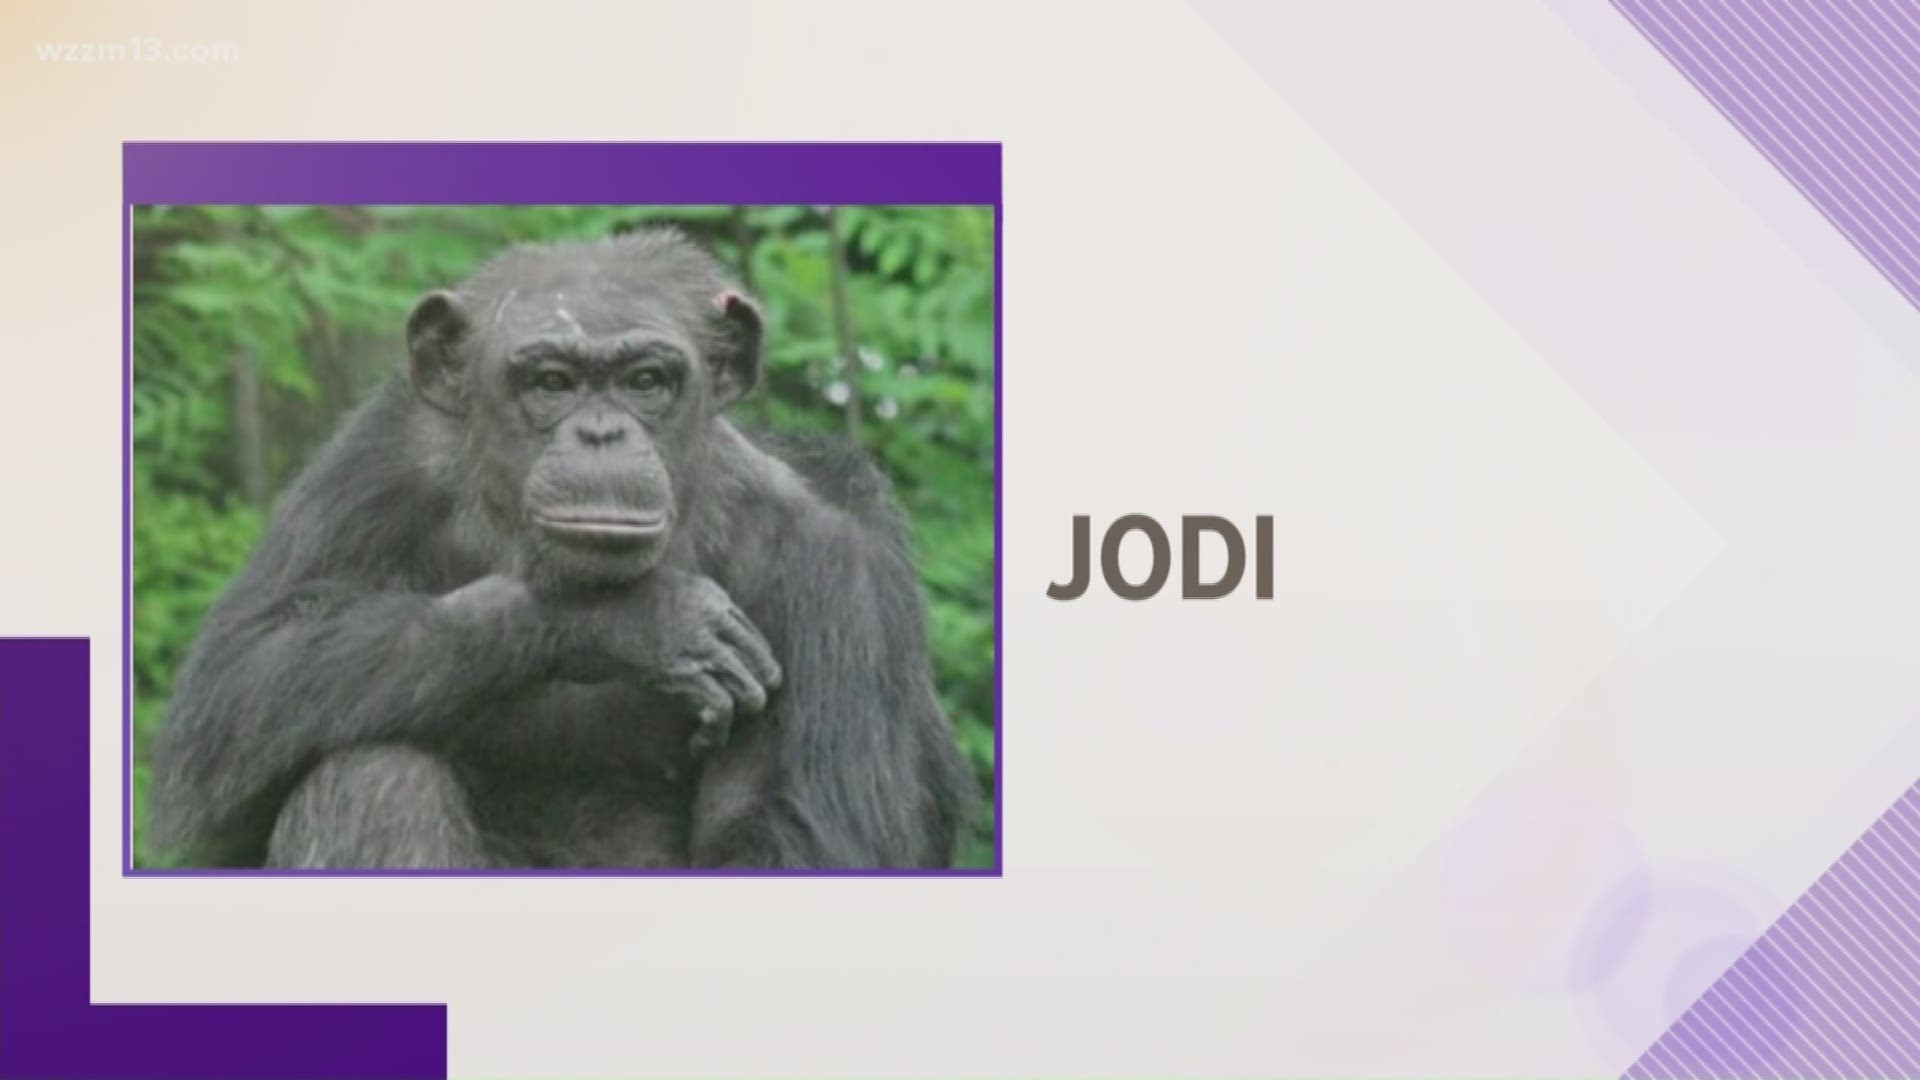 John Ball Zoo mourns loss of chimp